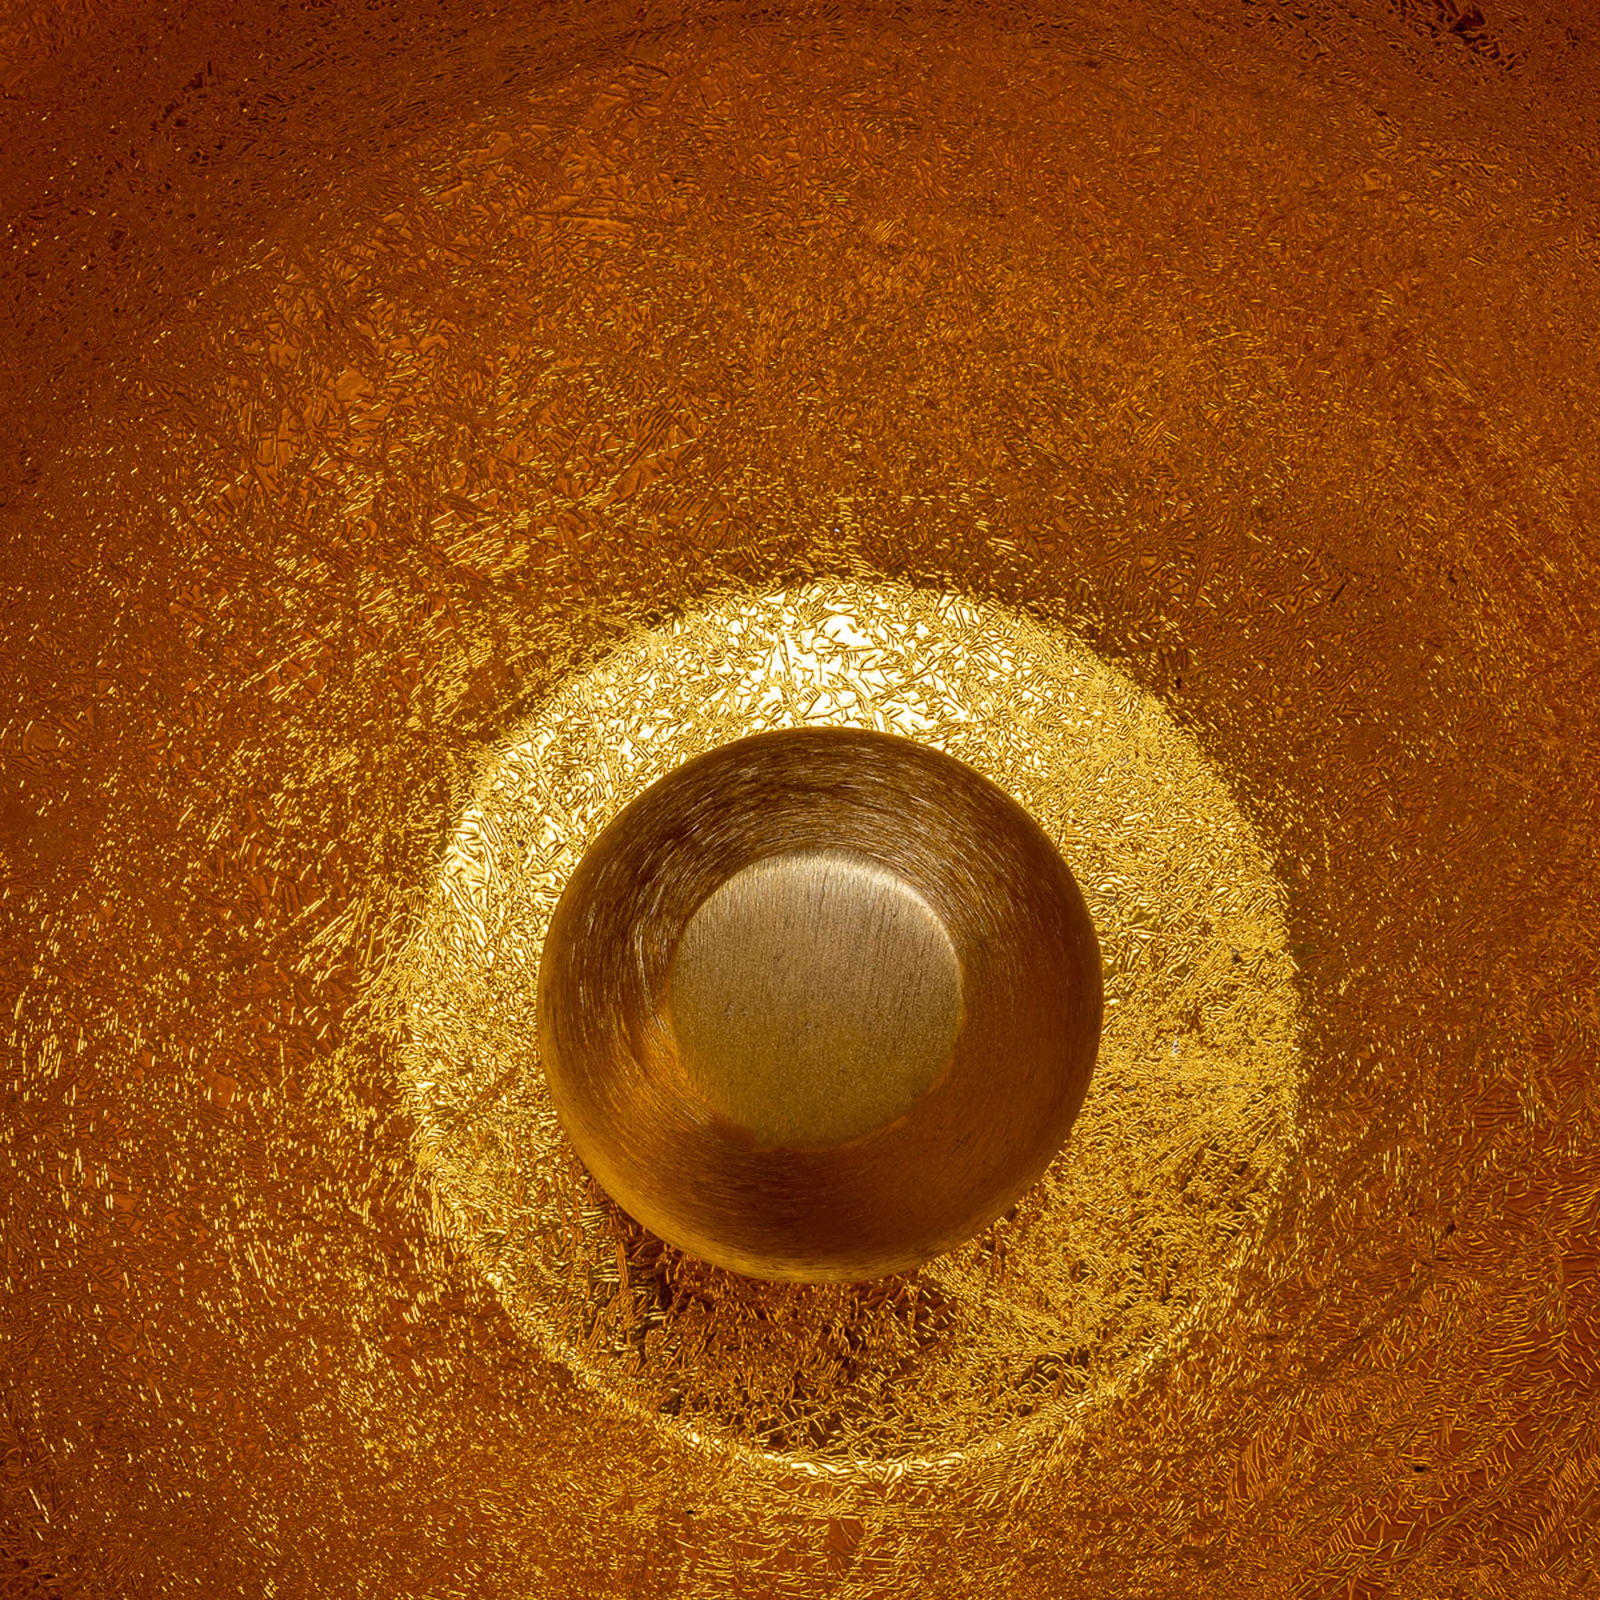 KARE Apollon stāvlampa, zelta krāsā, Ø 50 cm